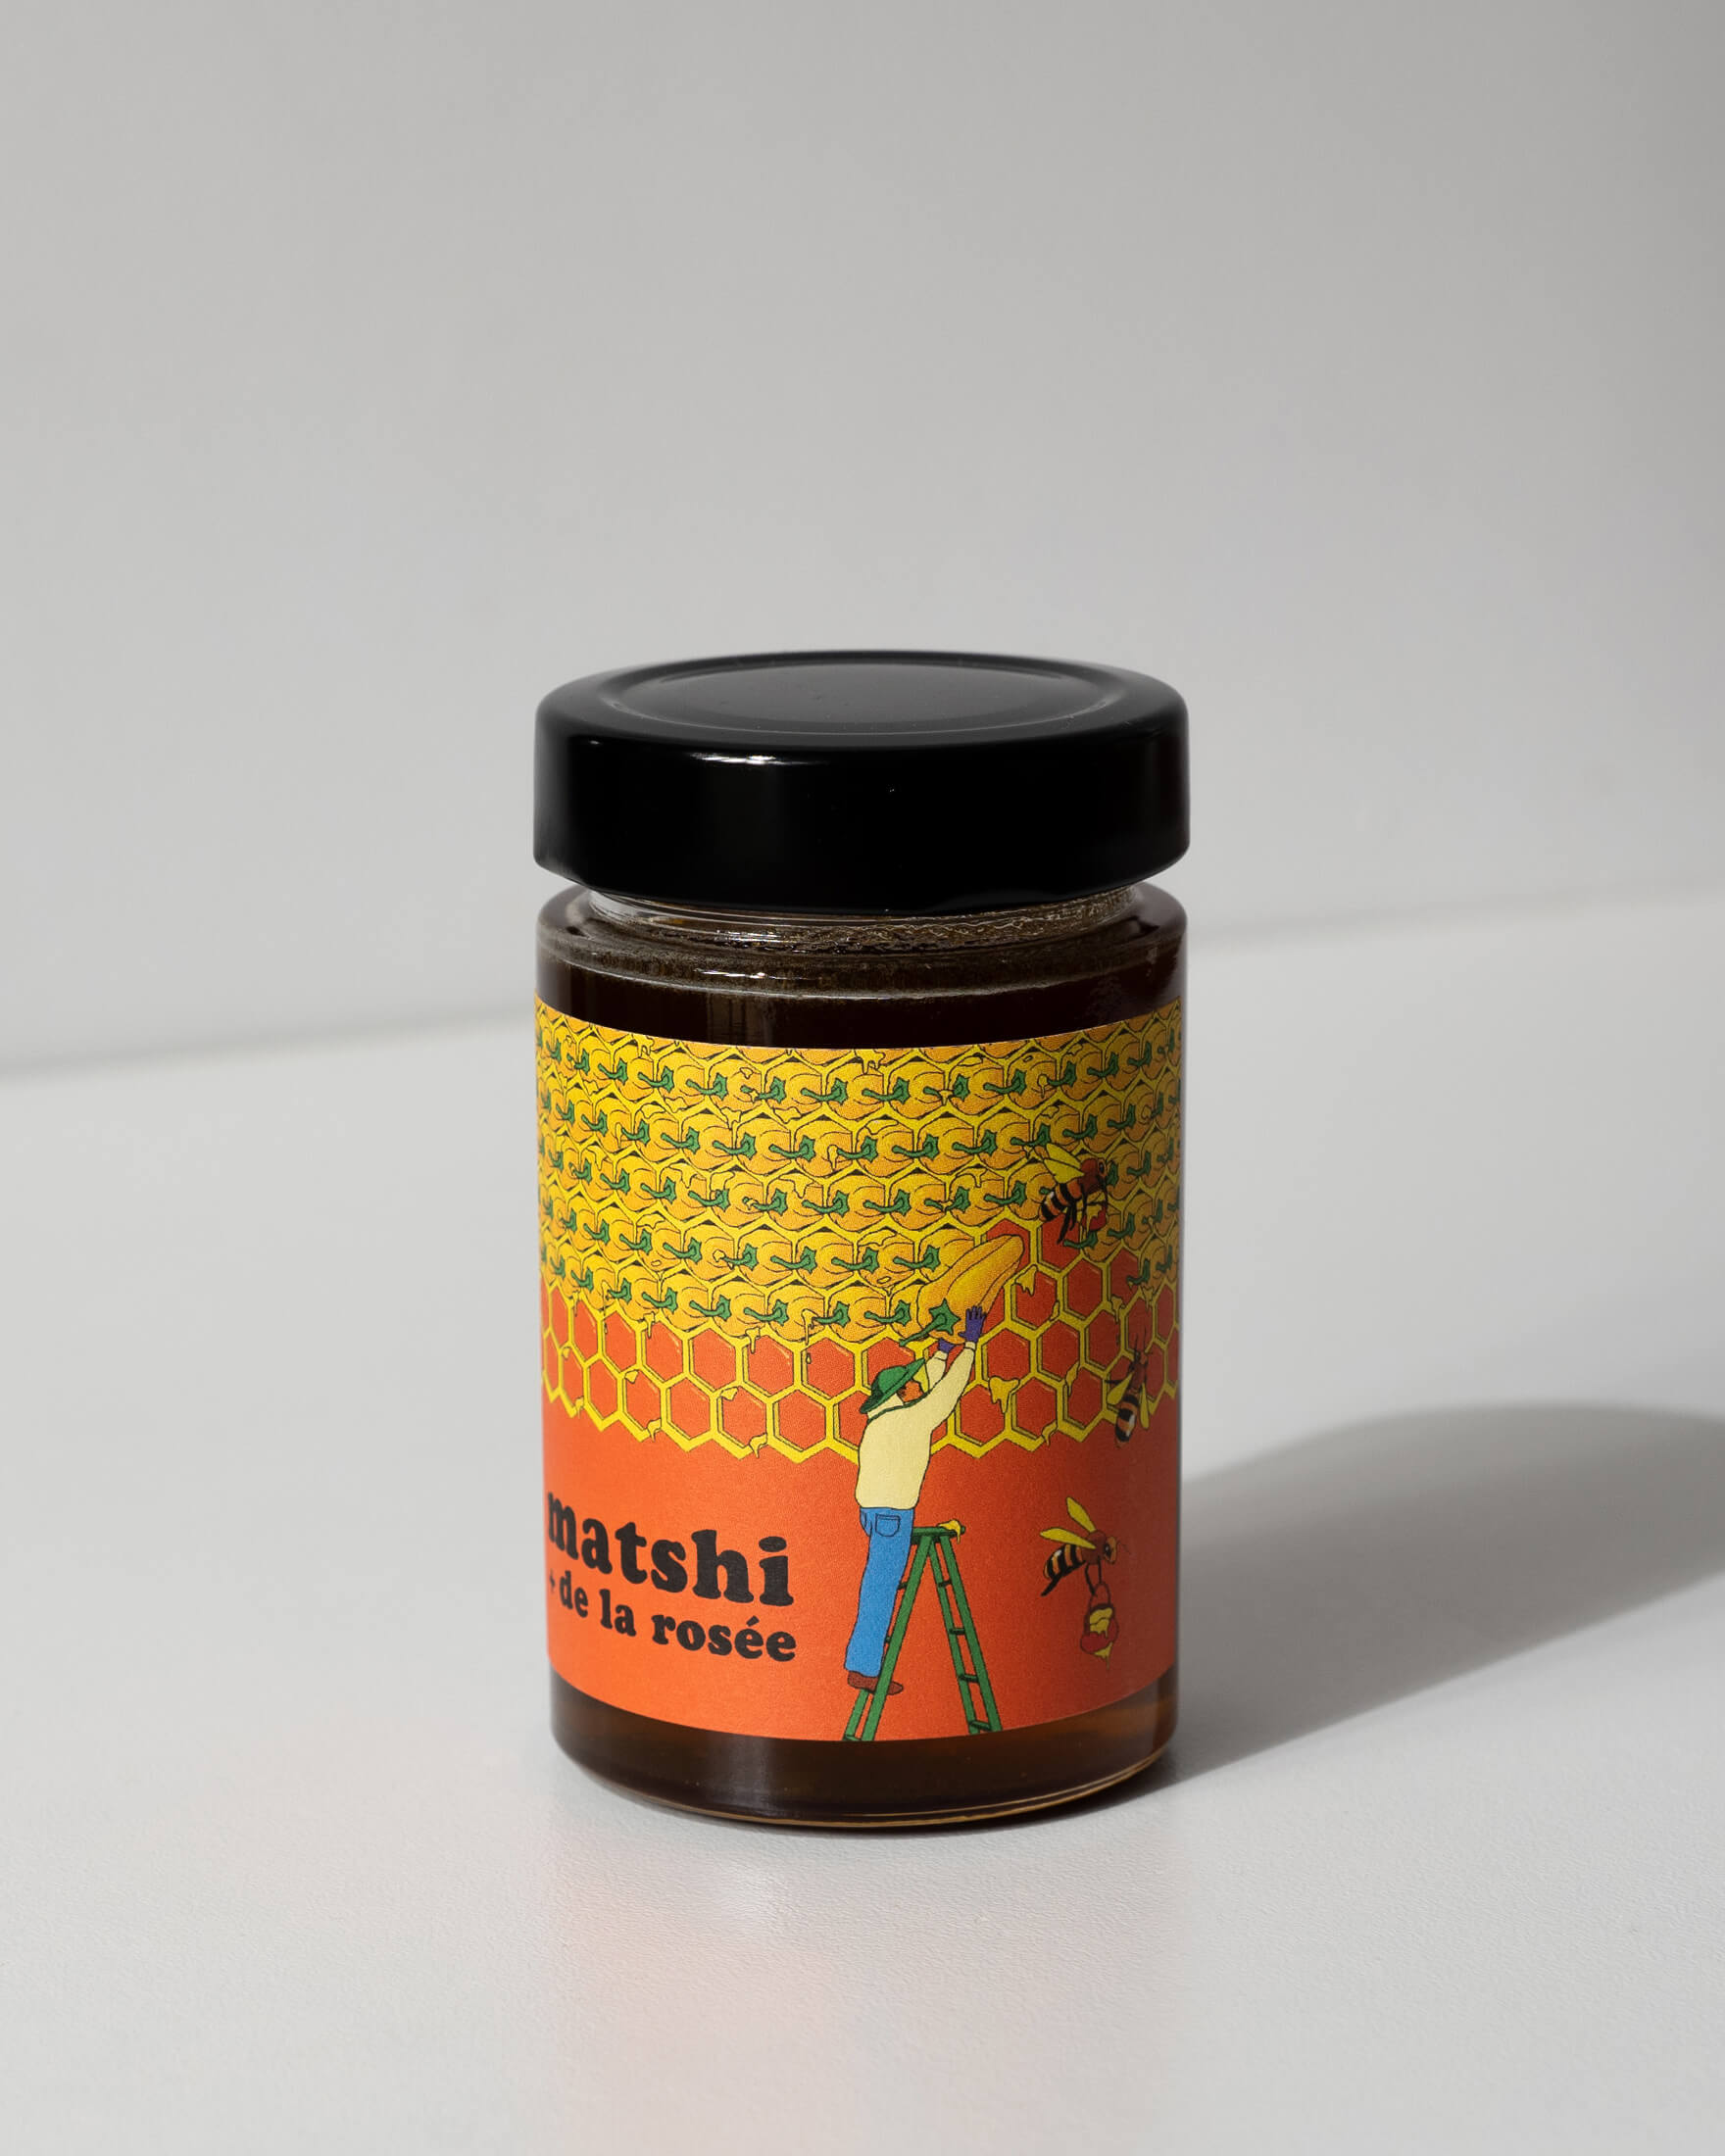 Mountain honey and chilli pepper DE LA ROSÉE x Matshi